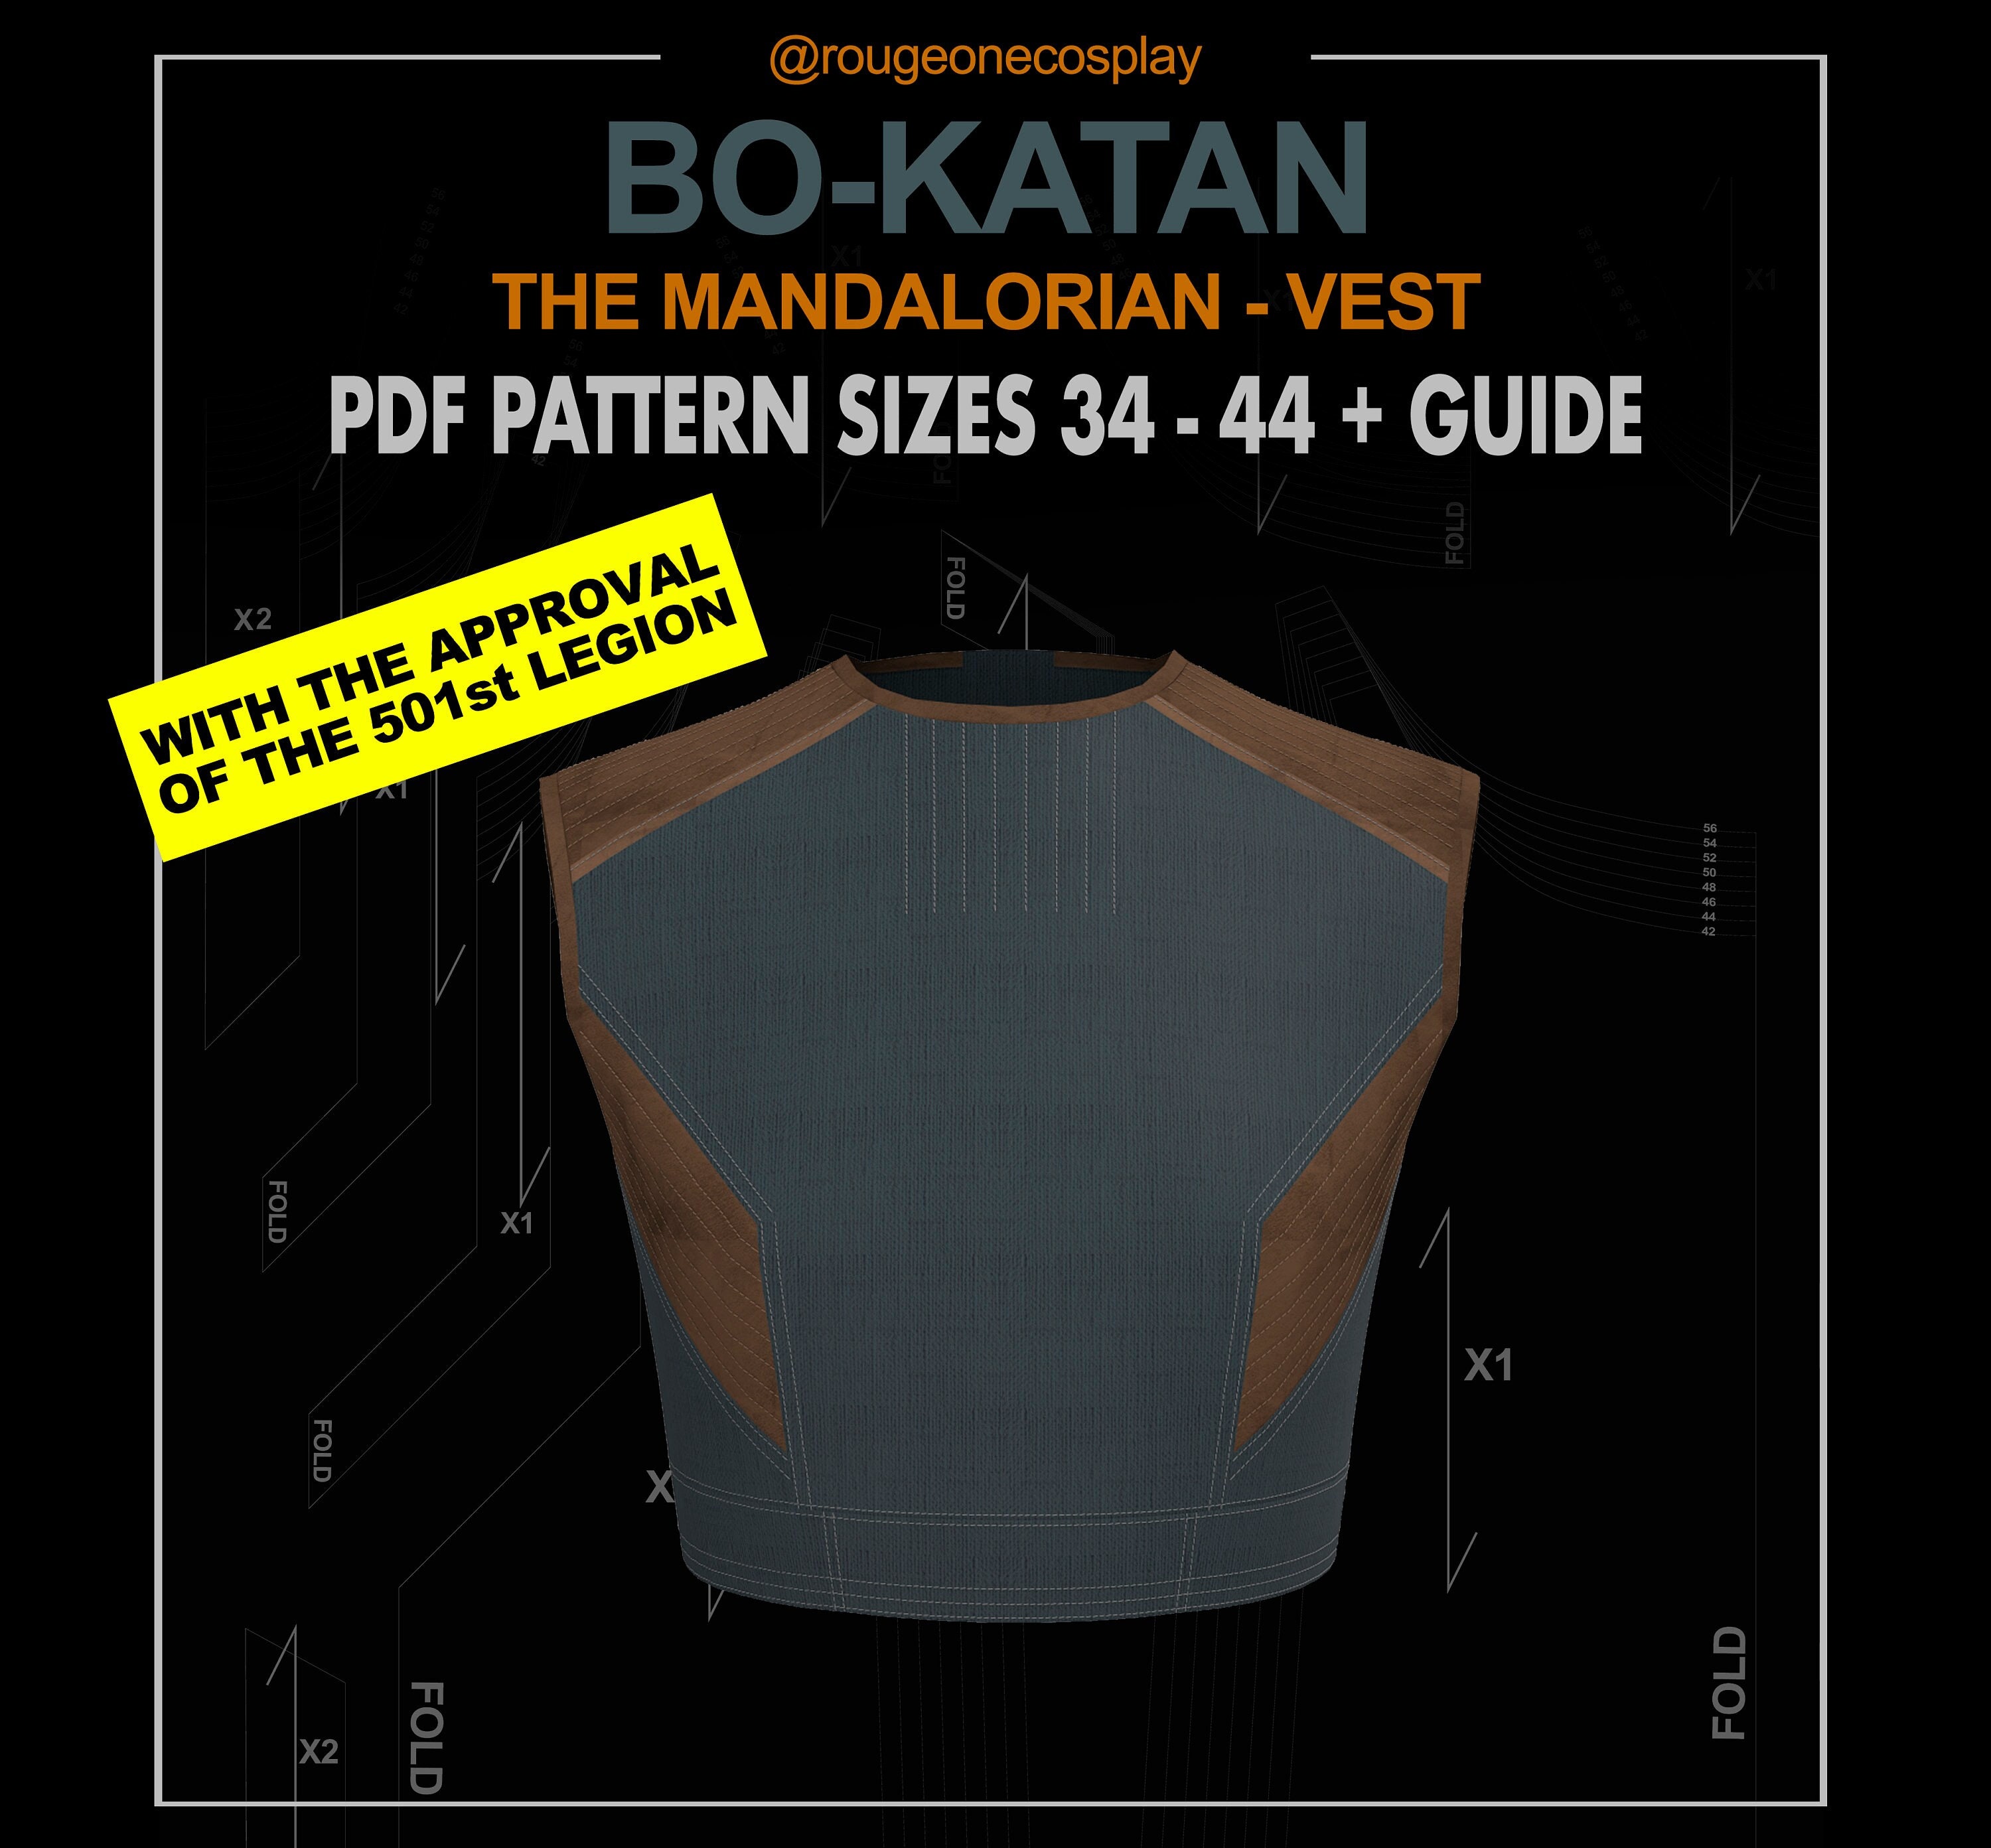 Bo-katan Flak Vest / Mandalorian Flight Suit / Cosplay Flak Vest